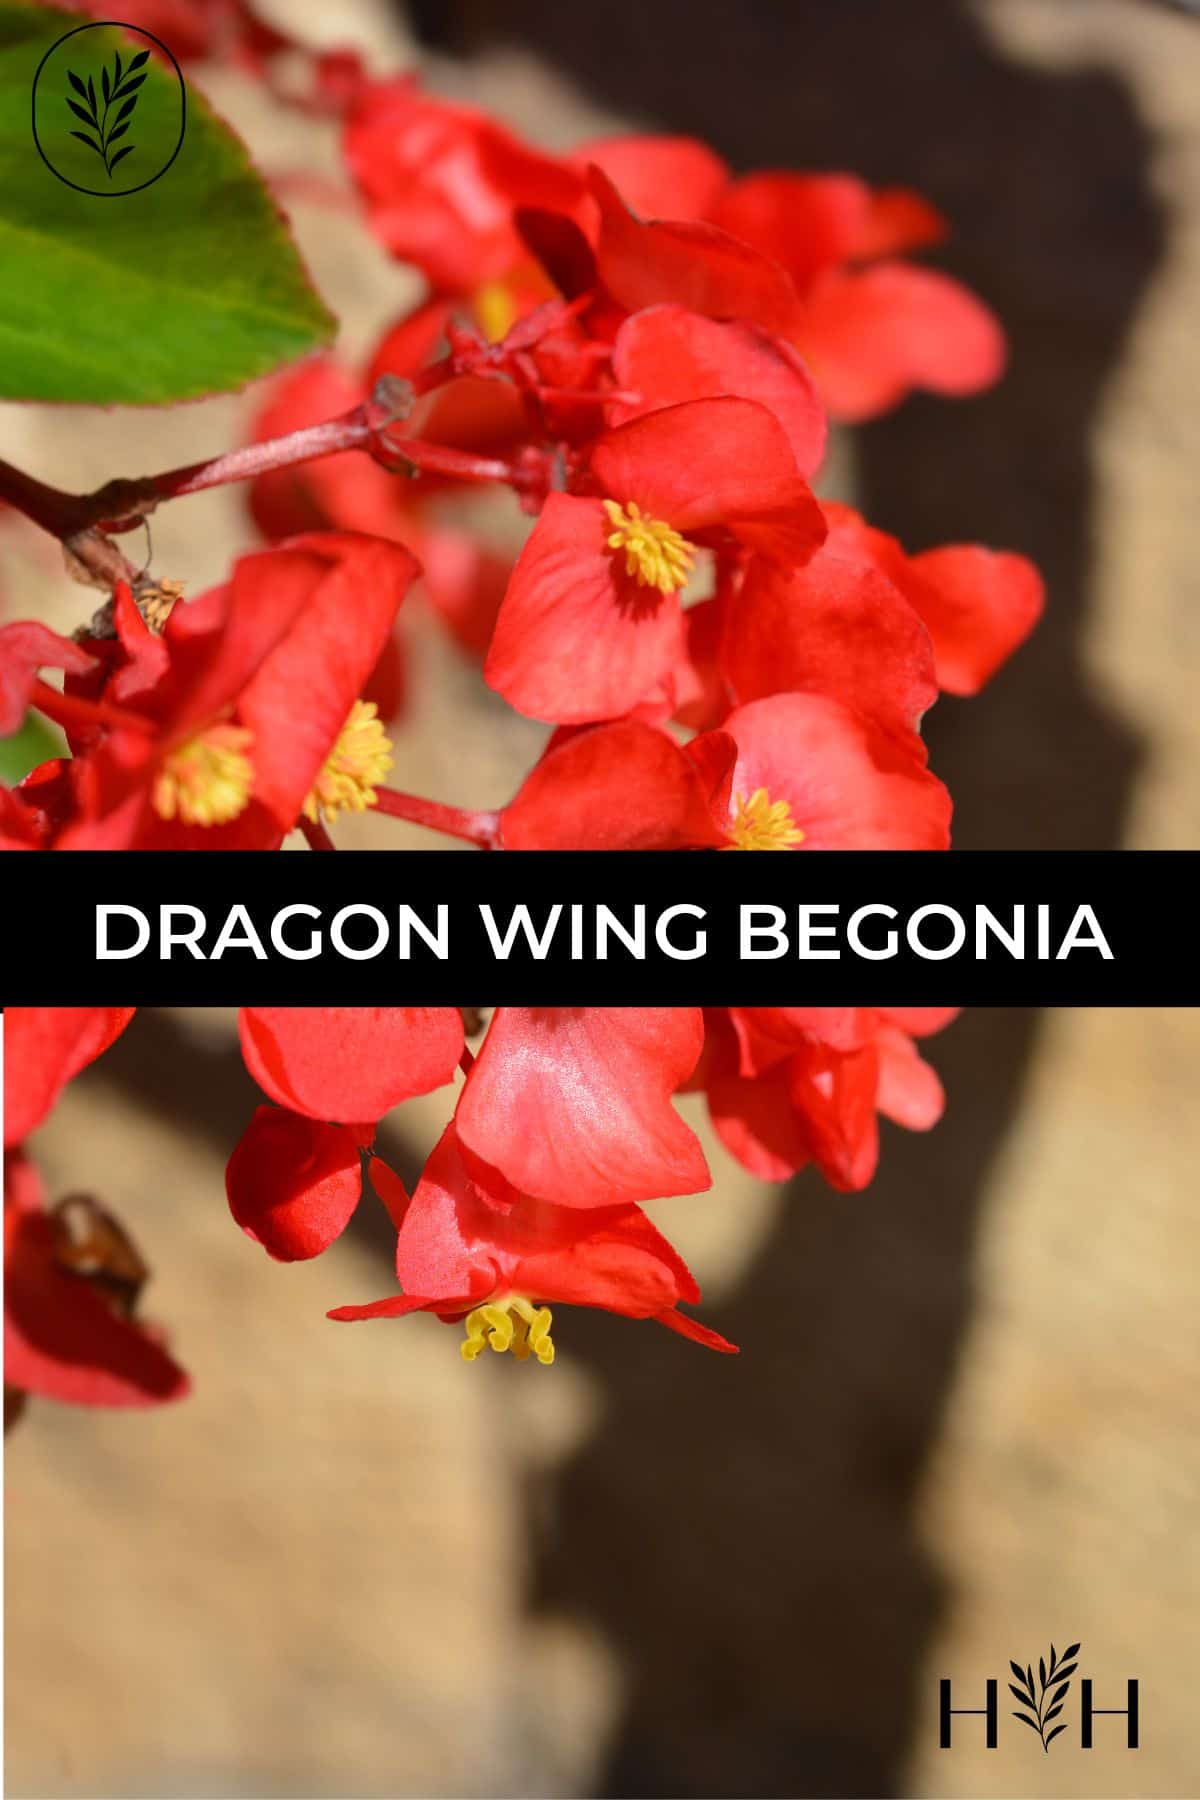 Dragon wing begonia via @home4theharvest